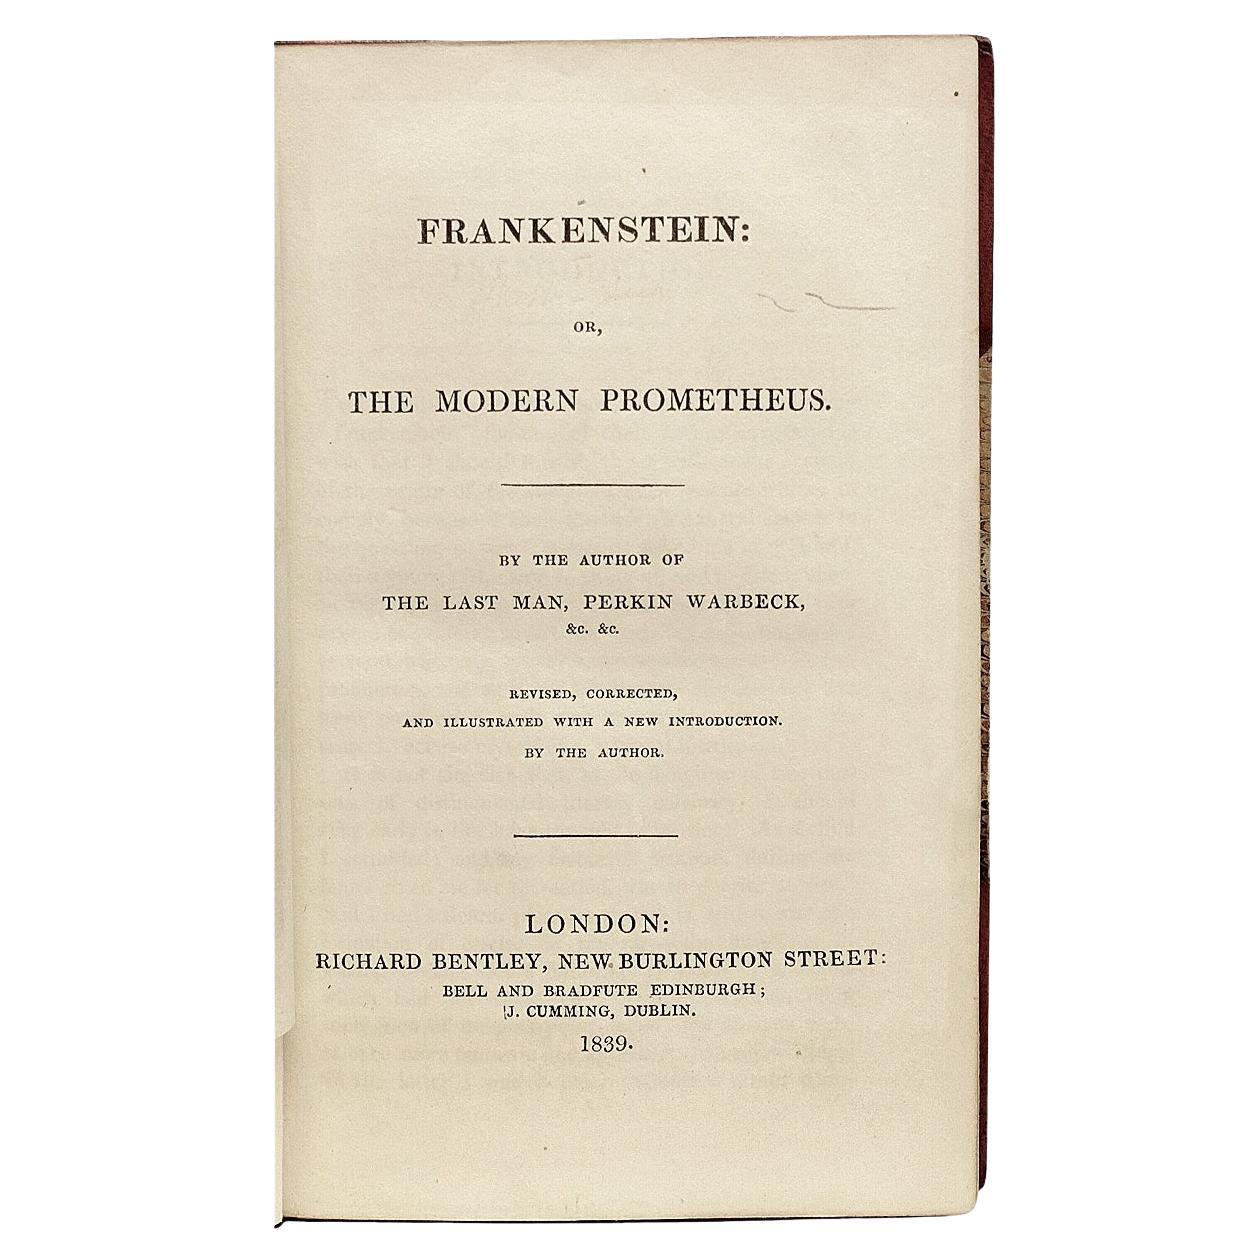 Mary Shelley, Frankenstein, Third Edition, Fourth Printing - 1839